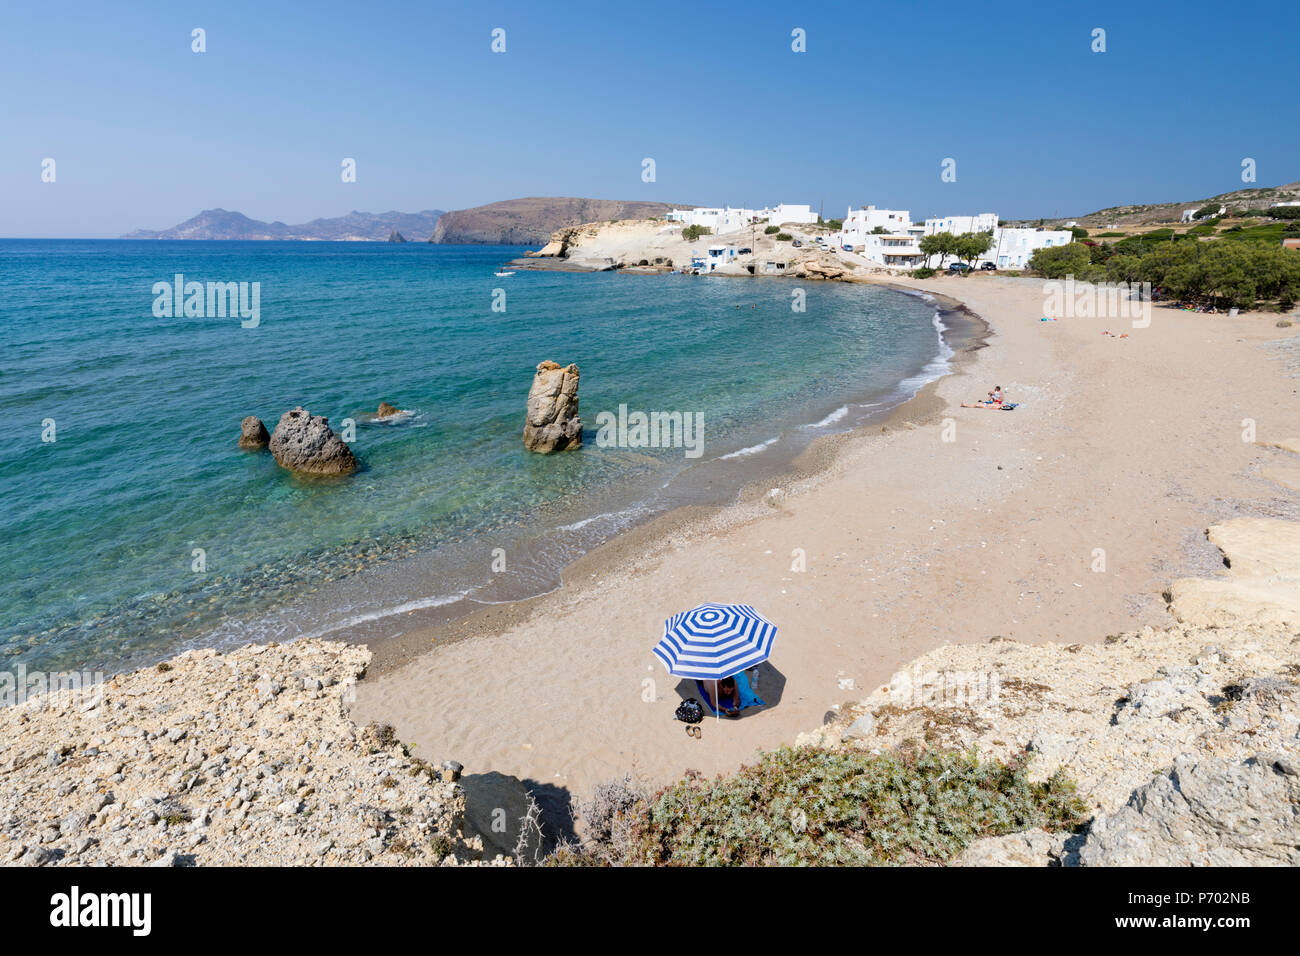 Pachena beach with clear turquoise water, Pachena, Milos, Cyclades, Aegean Sea, Greek Islands, Greece, Europe Stock Photo